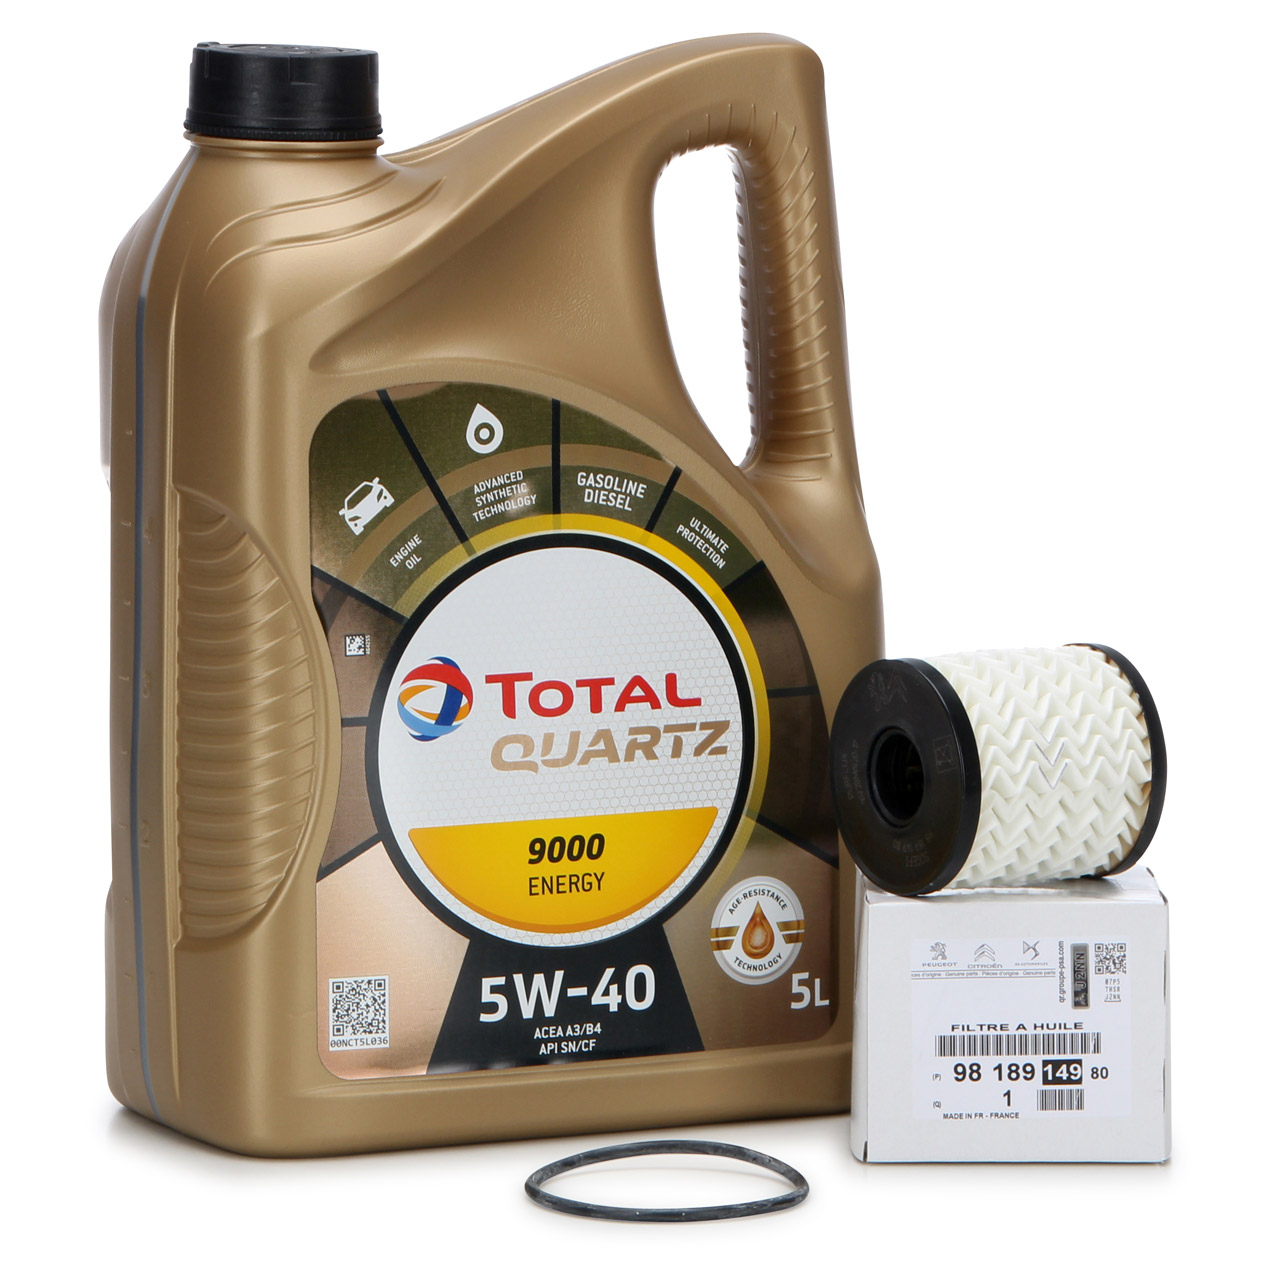 5L 5 Liter TOTAL QUARTZ 9000 ENERGY 5W-40 + ORIGINAL PSA Ölfilter 9818914980